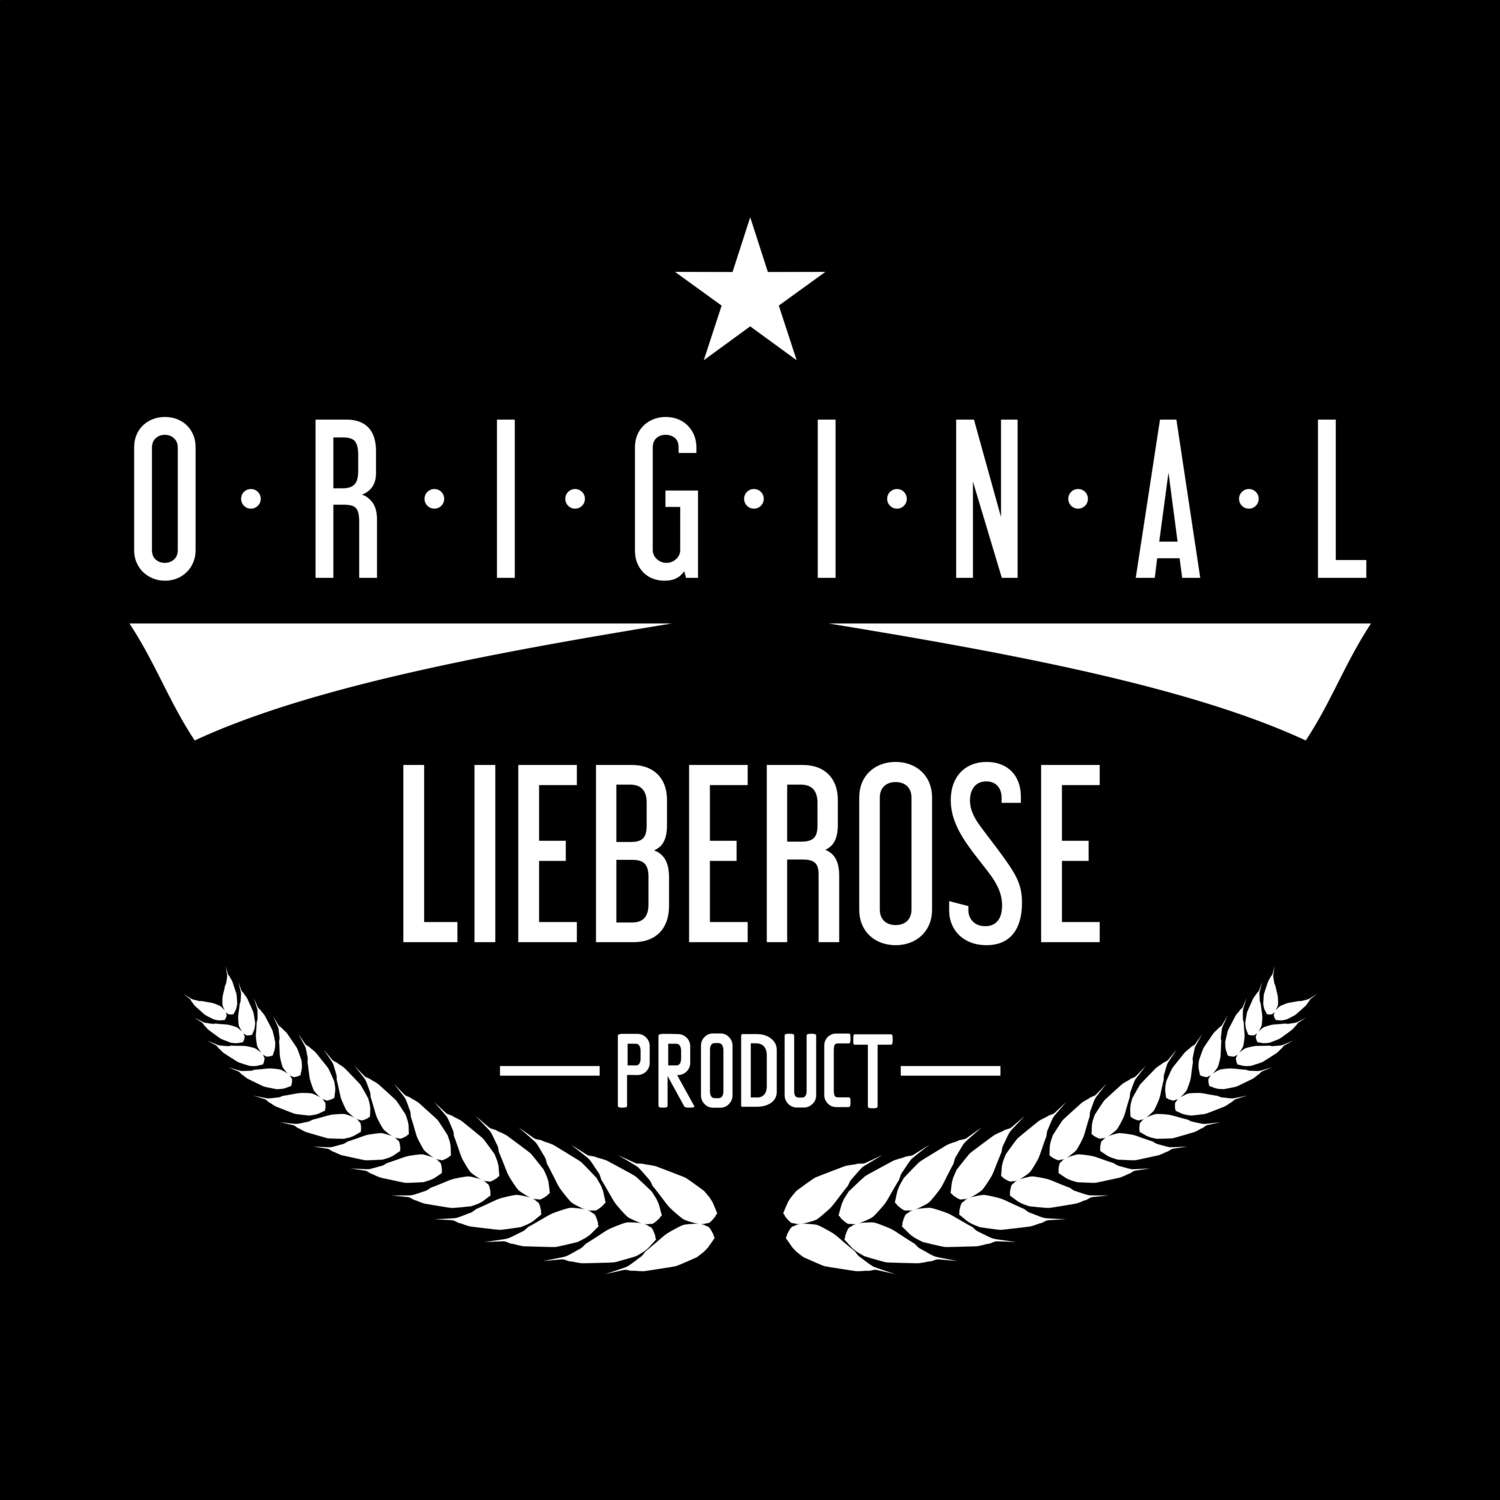 Lieberose T-Shirt »Original Product«